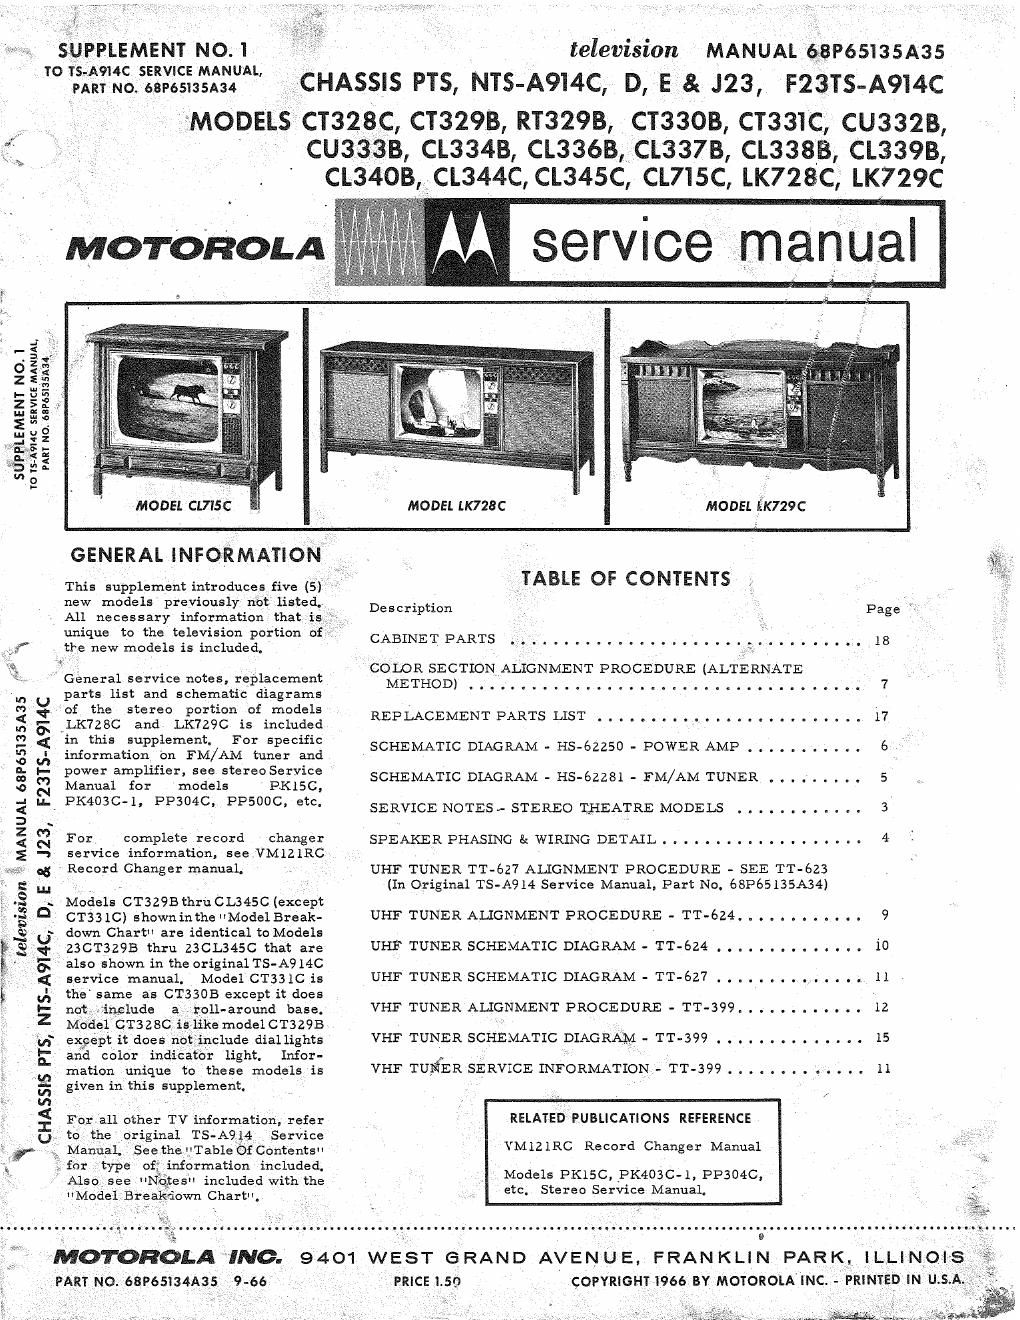 motorola cl 334 b service manual